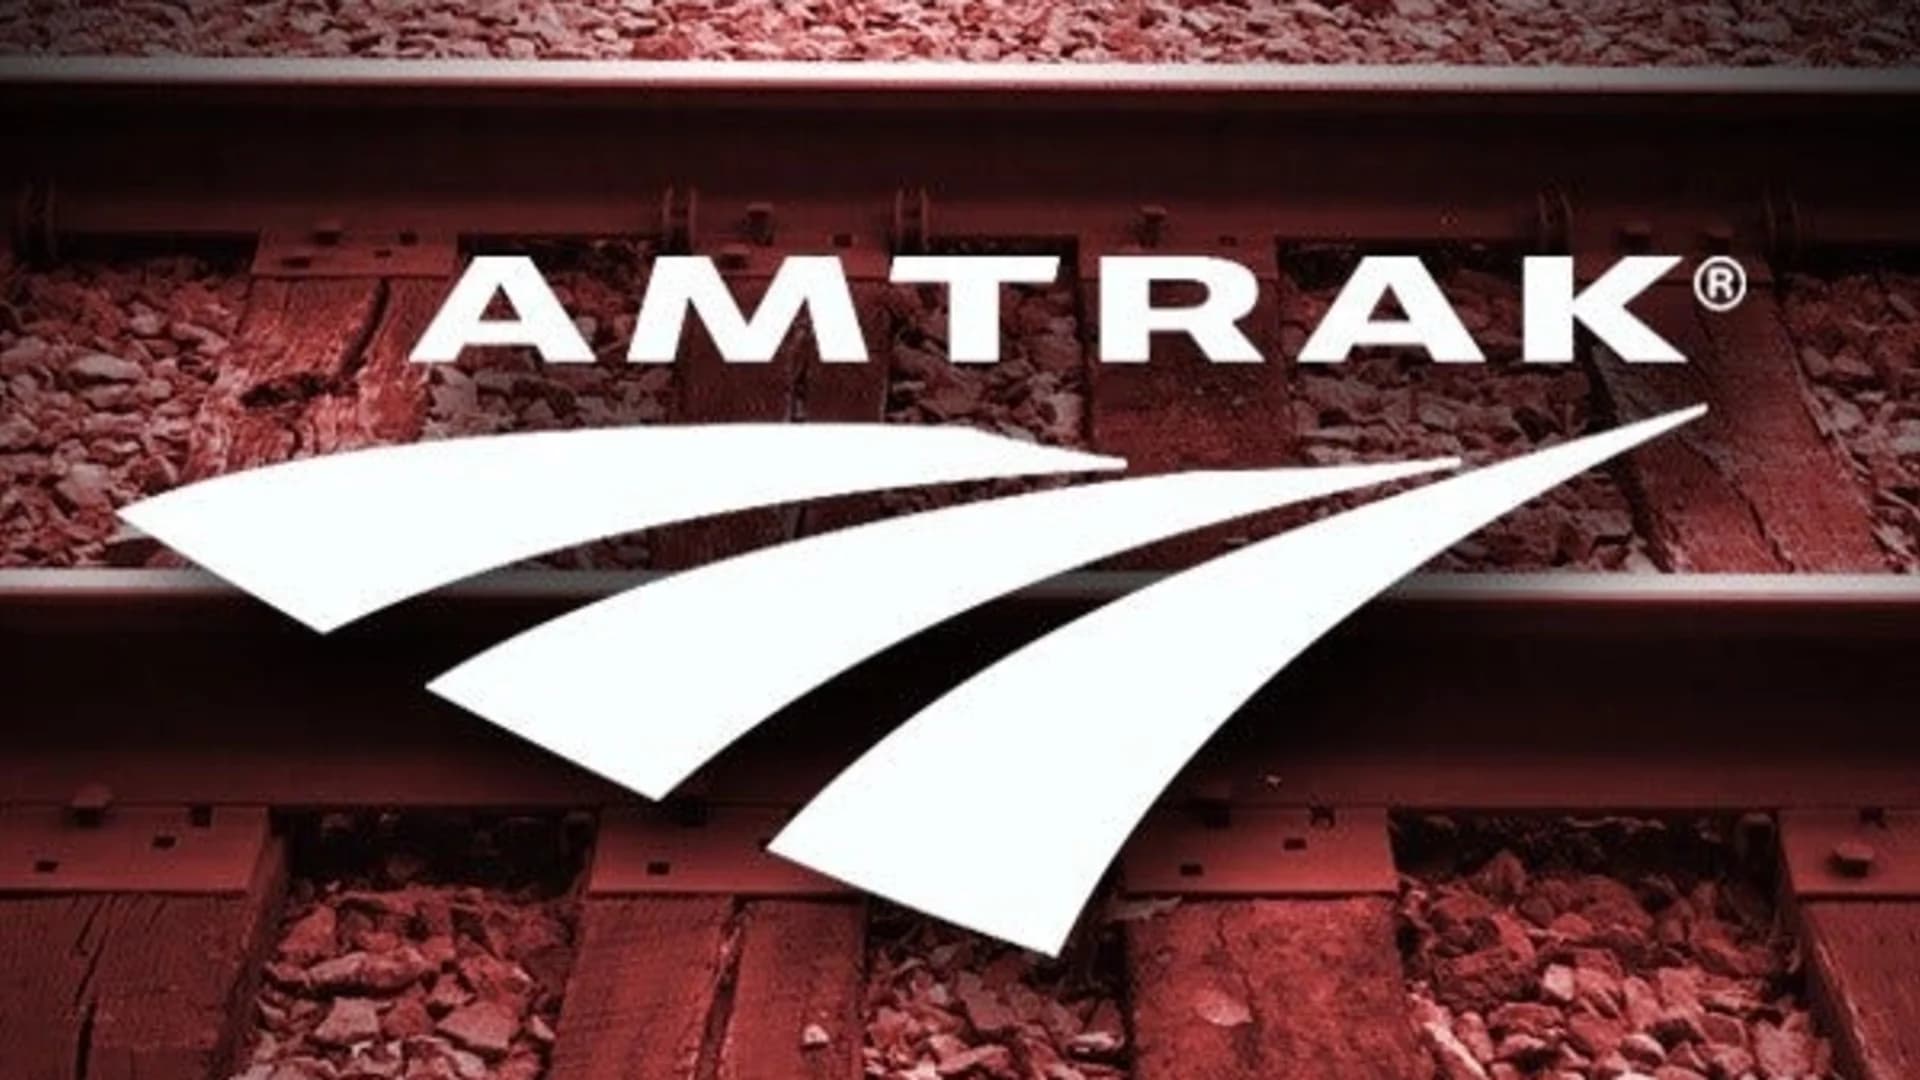 Amtrak service restored between New York and New Haven after derailment